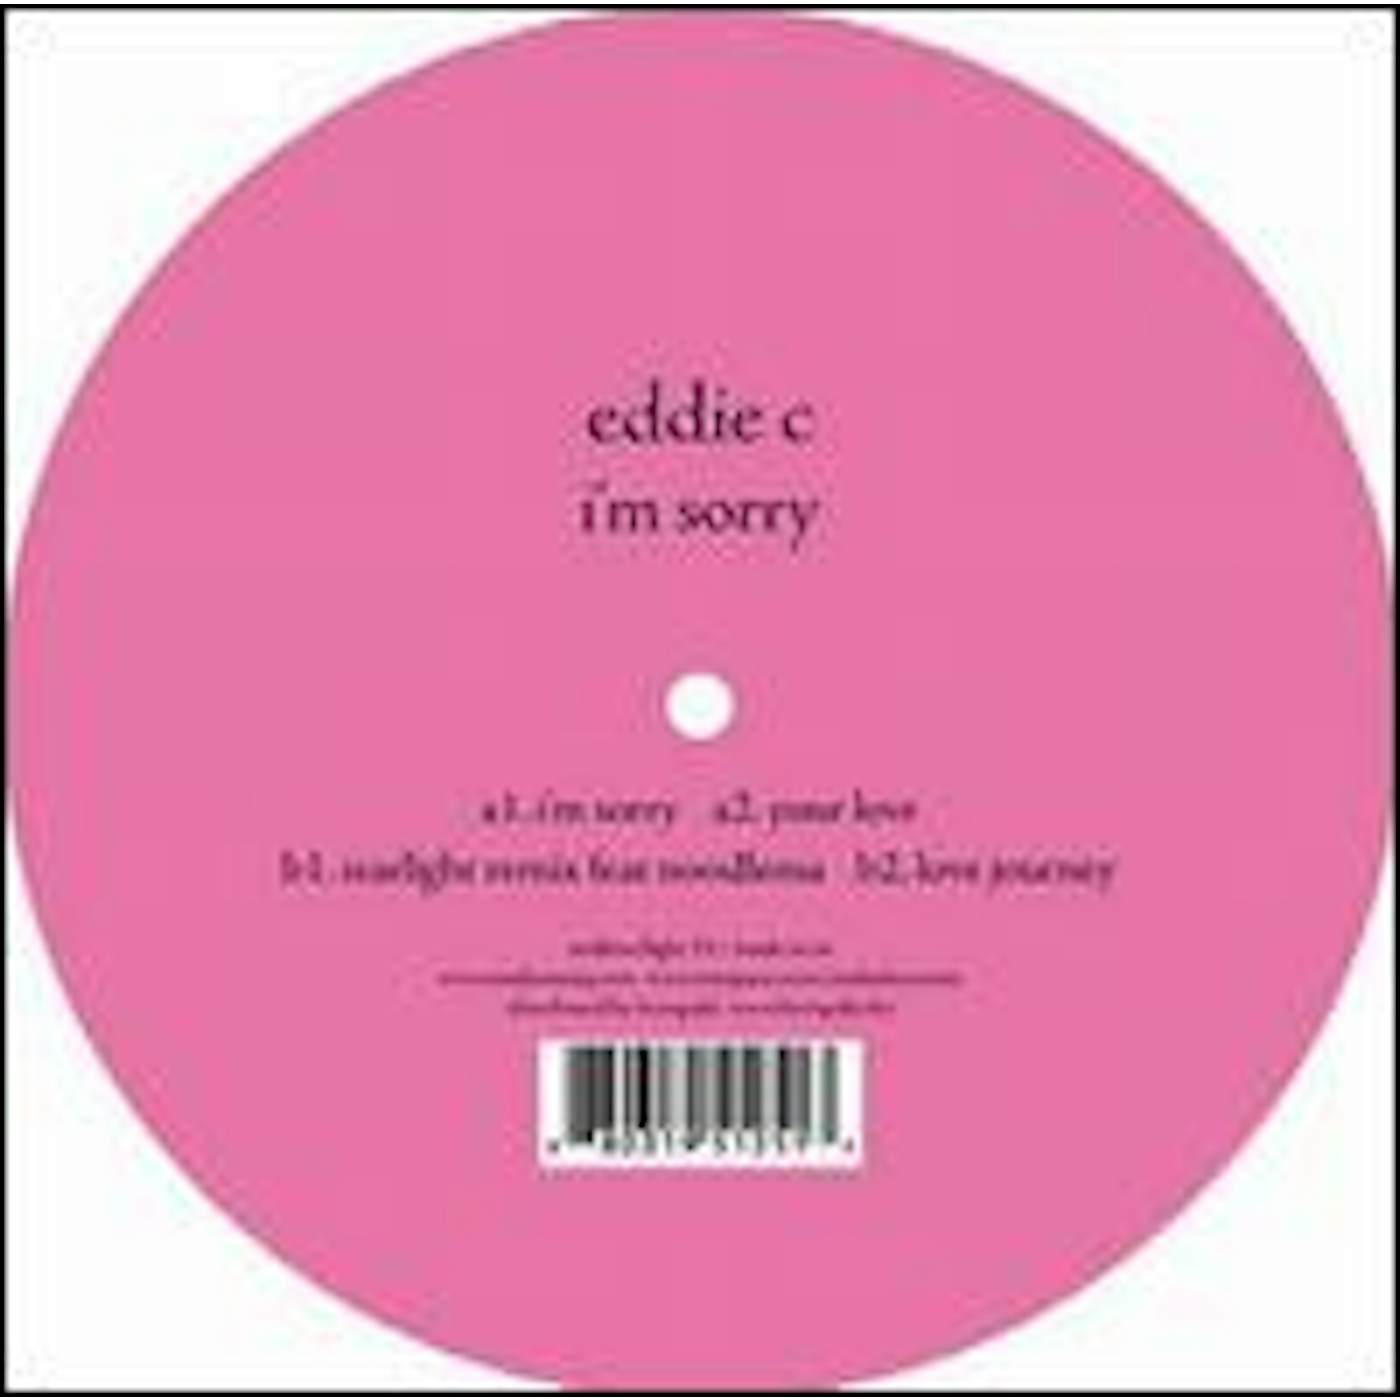 Eddie C IM SORRY Vinyl Record